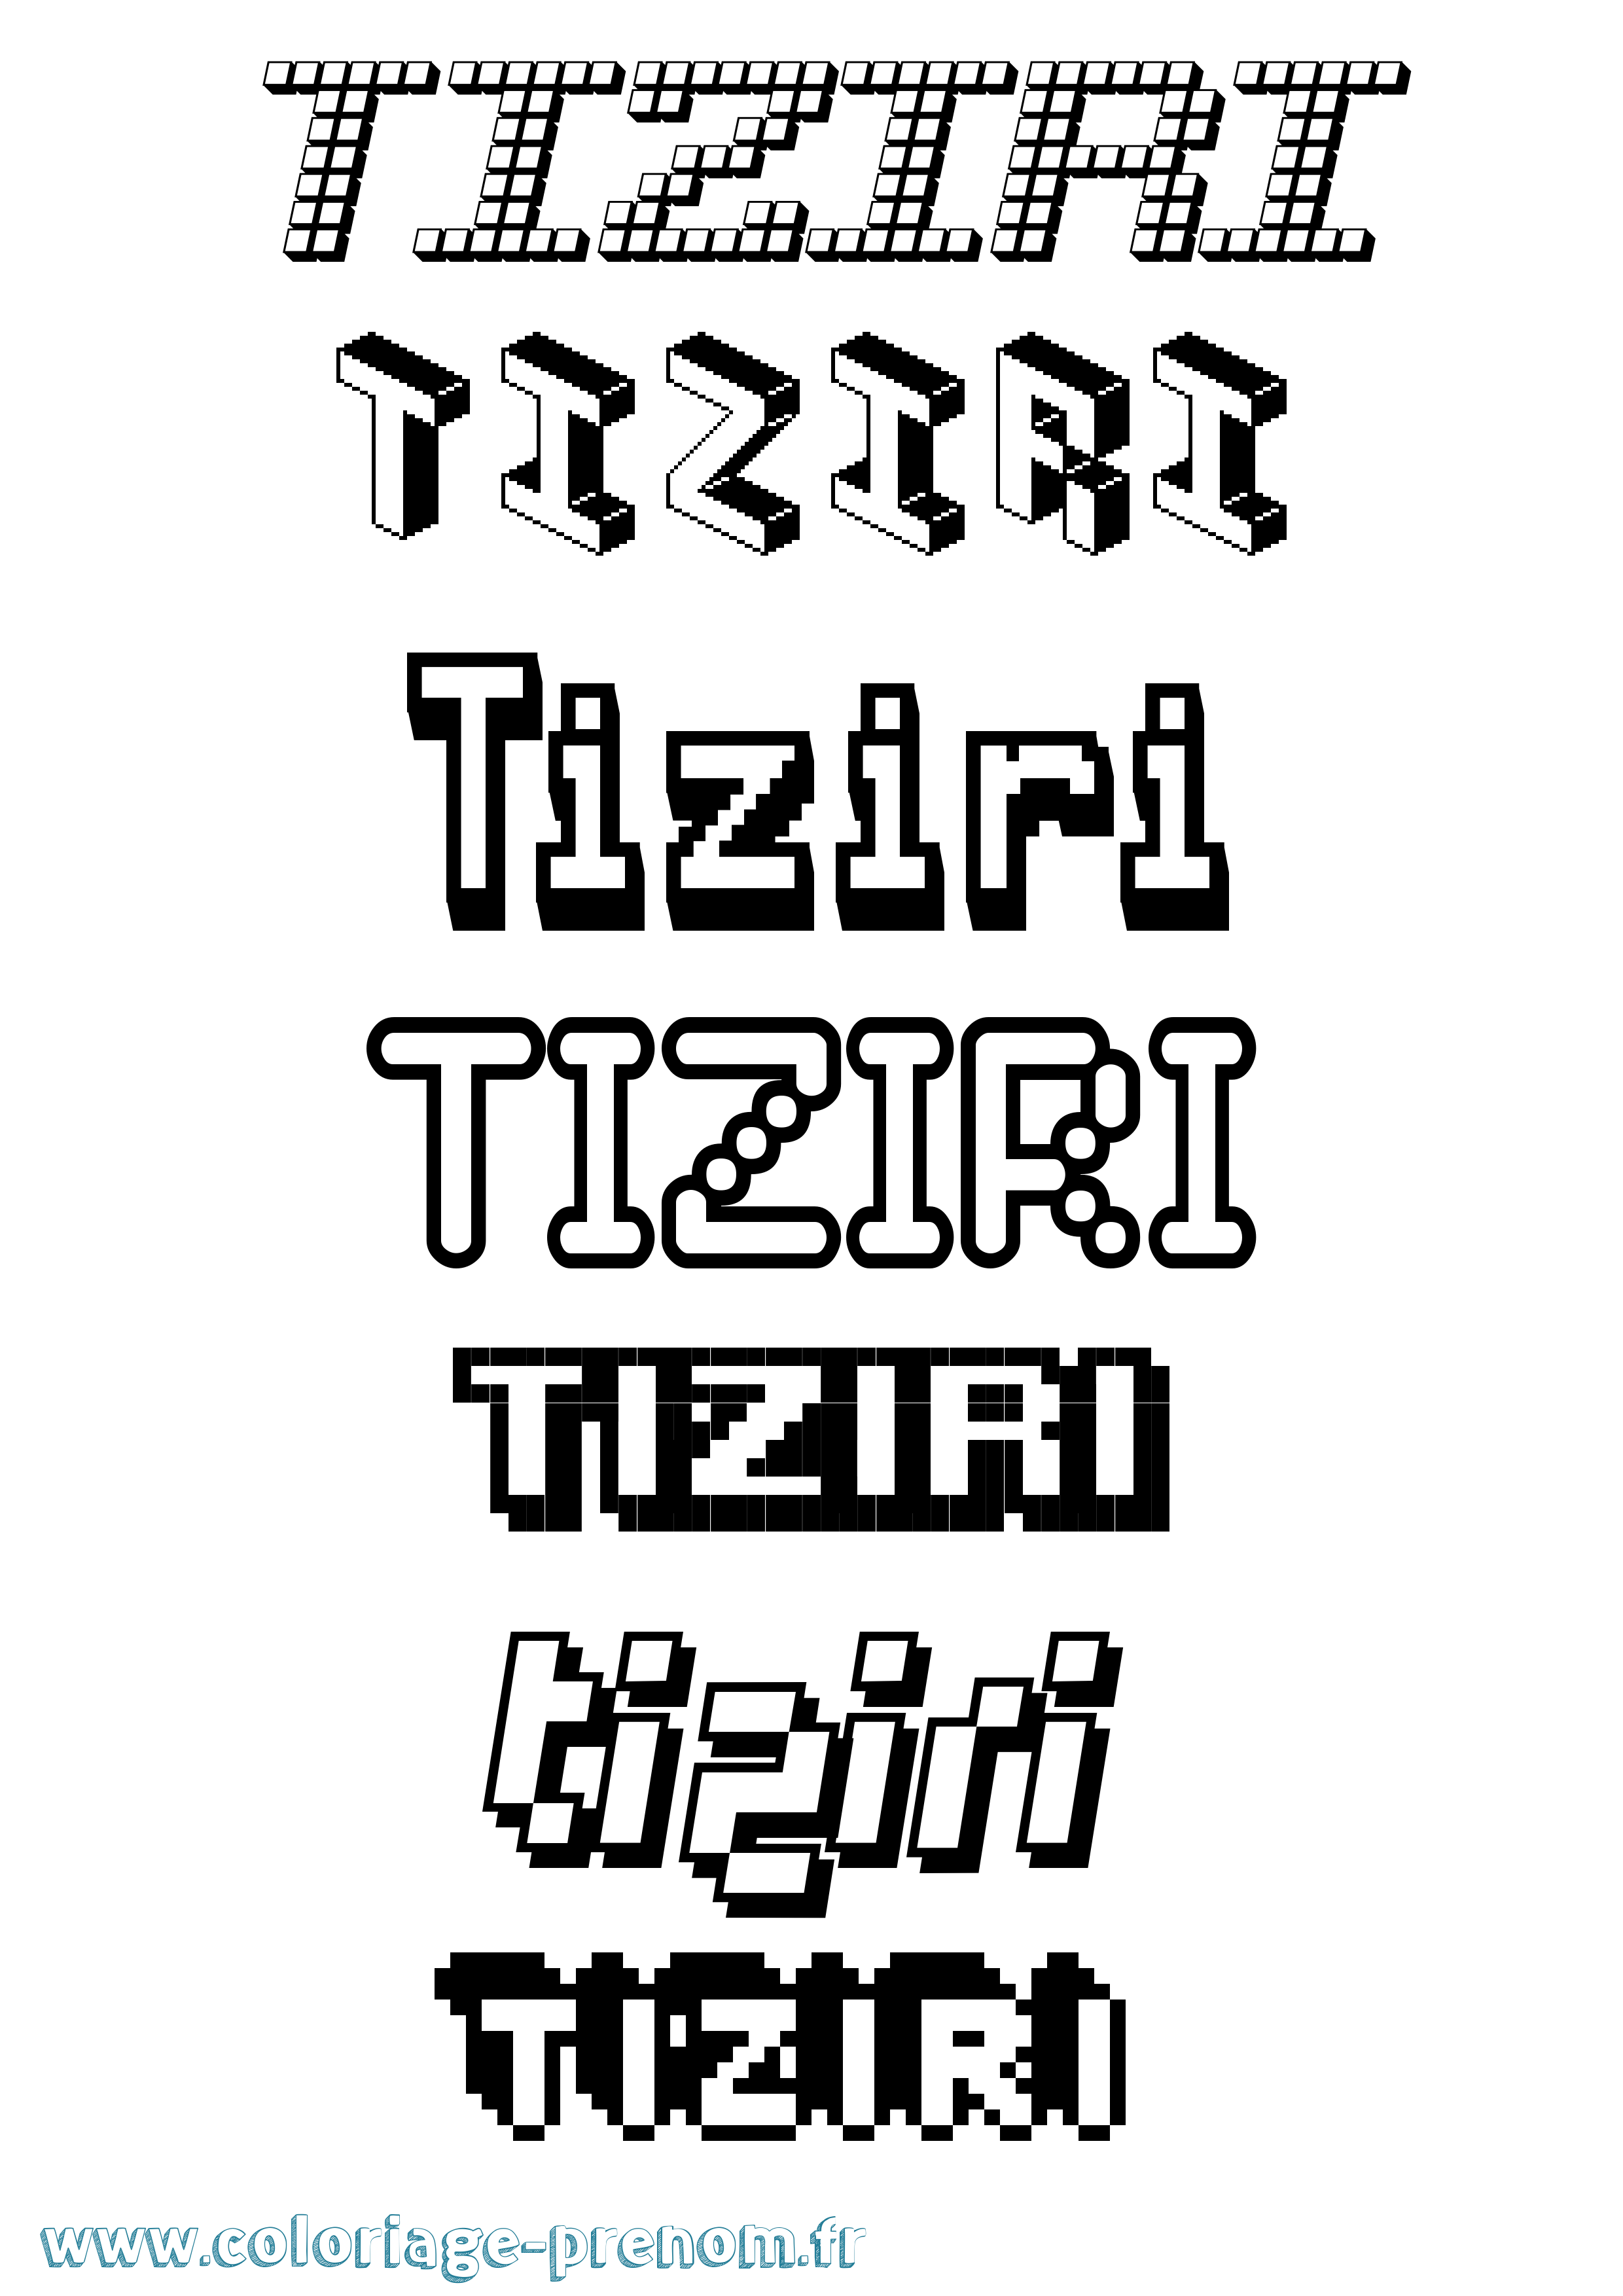 Coloriage prénom Tiziri Pixel